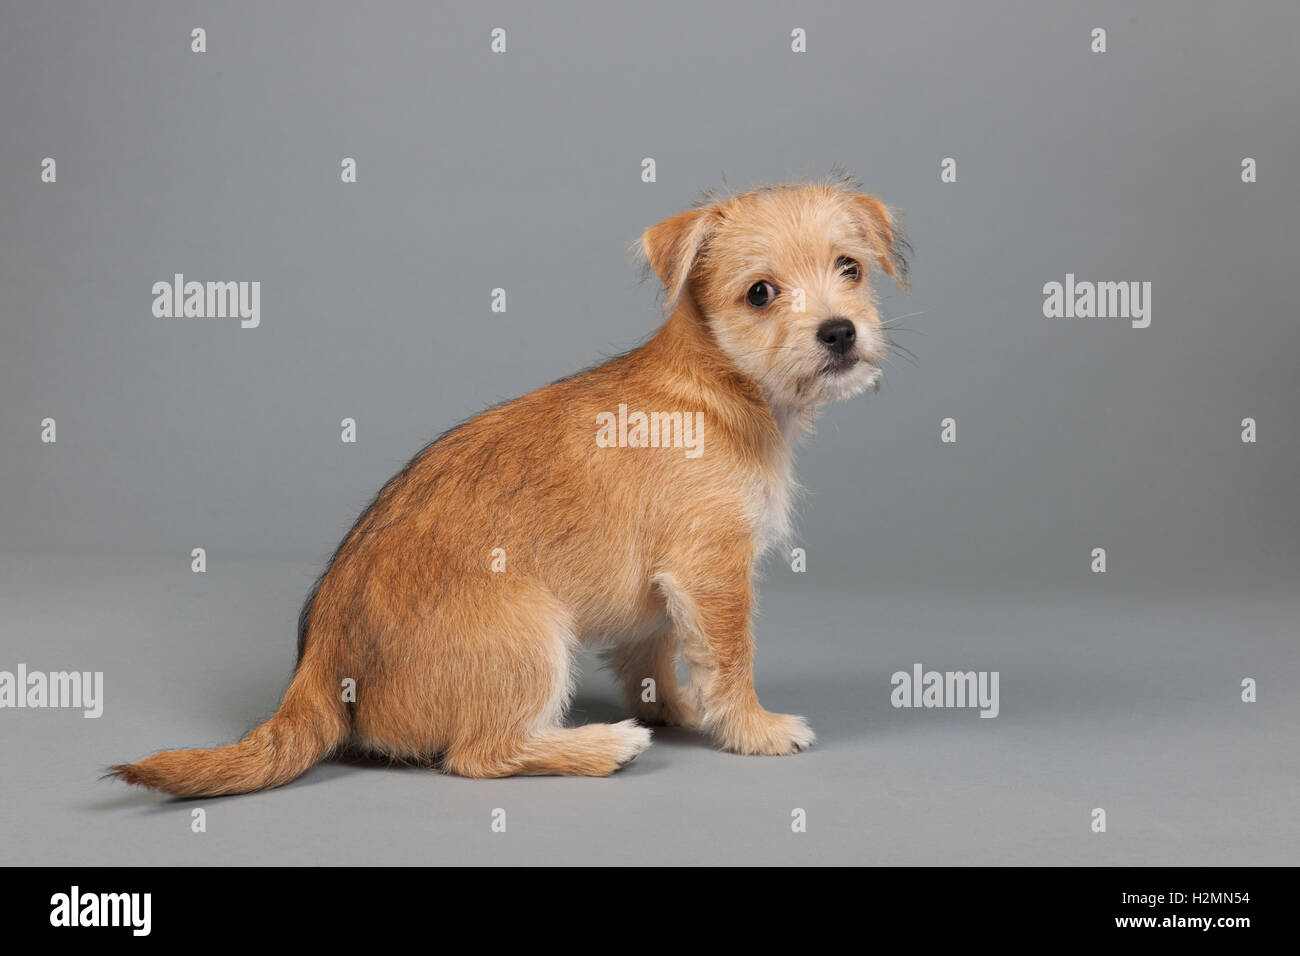 Cute little puppy Stock Photo